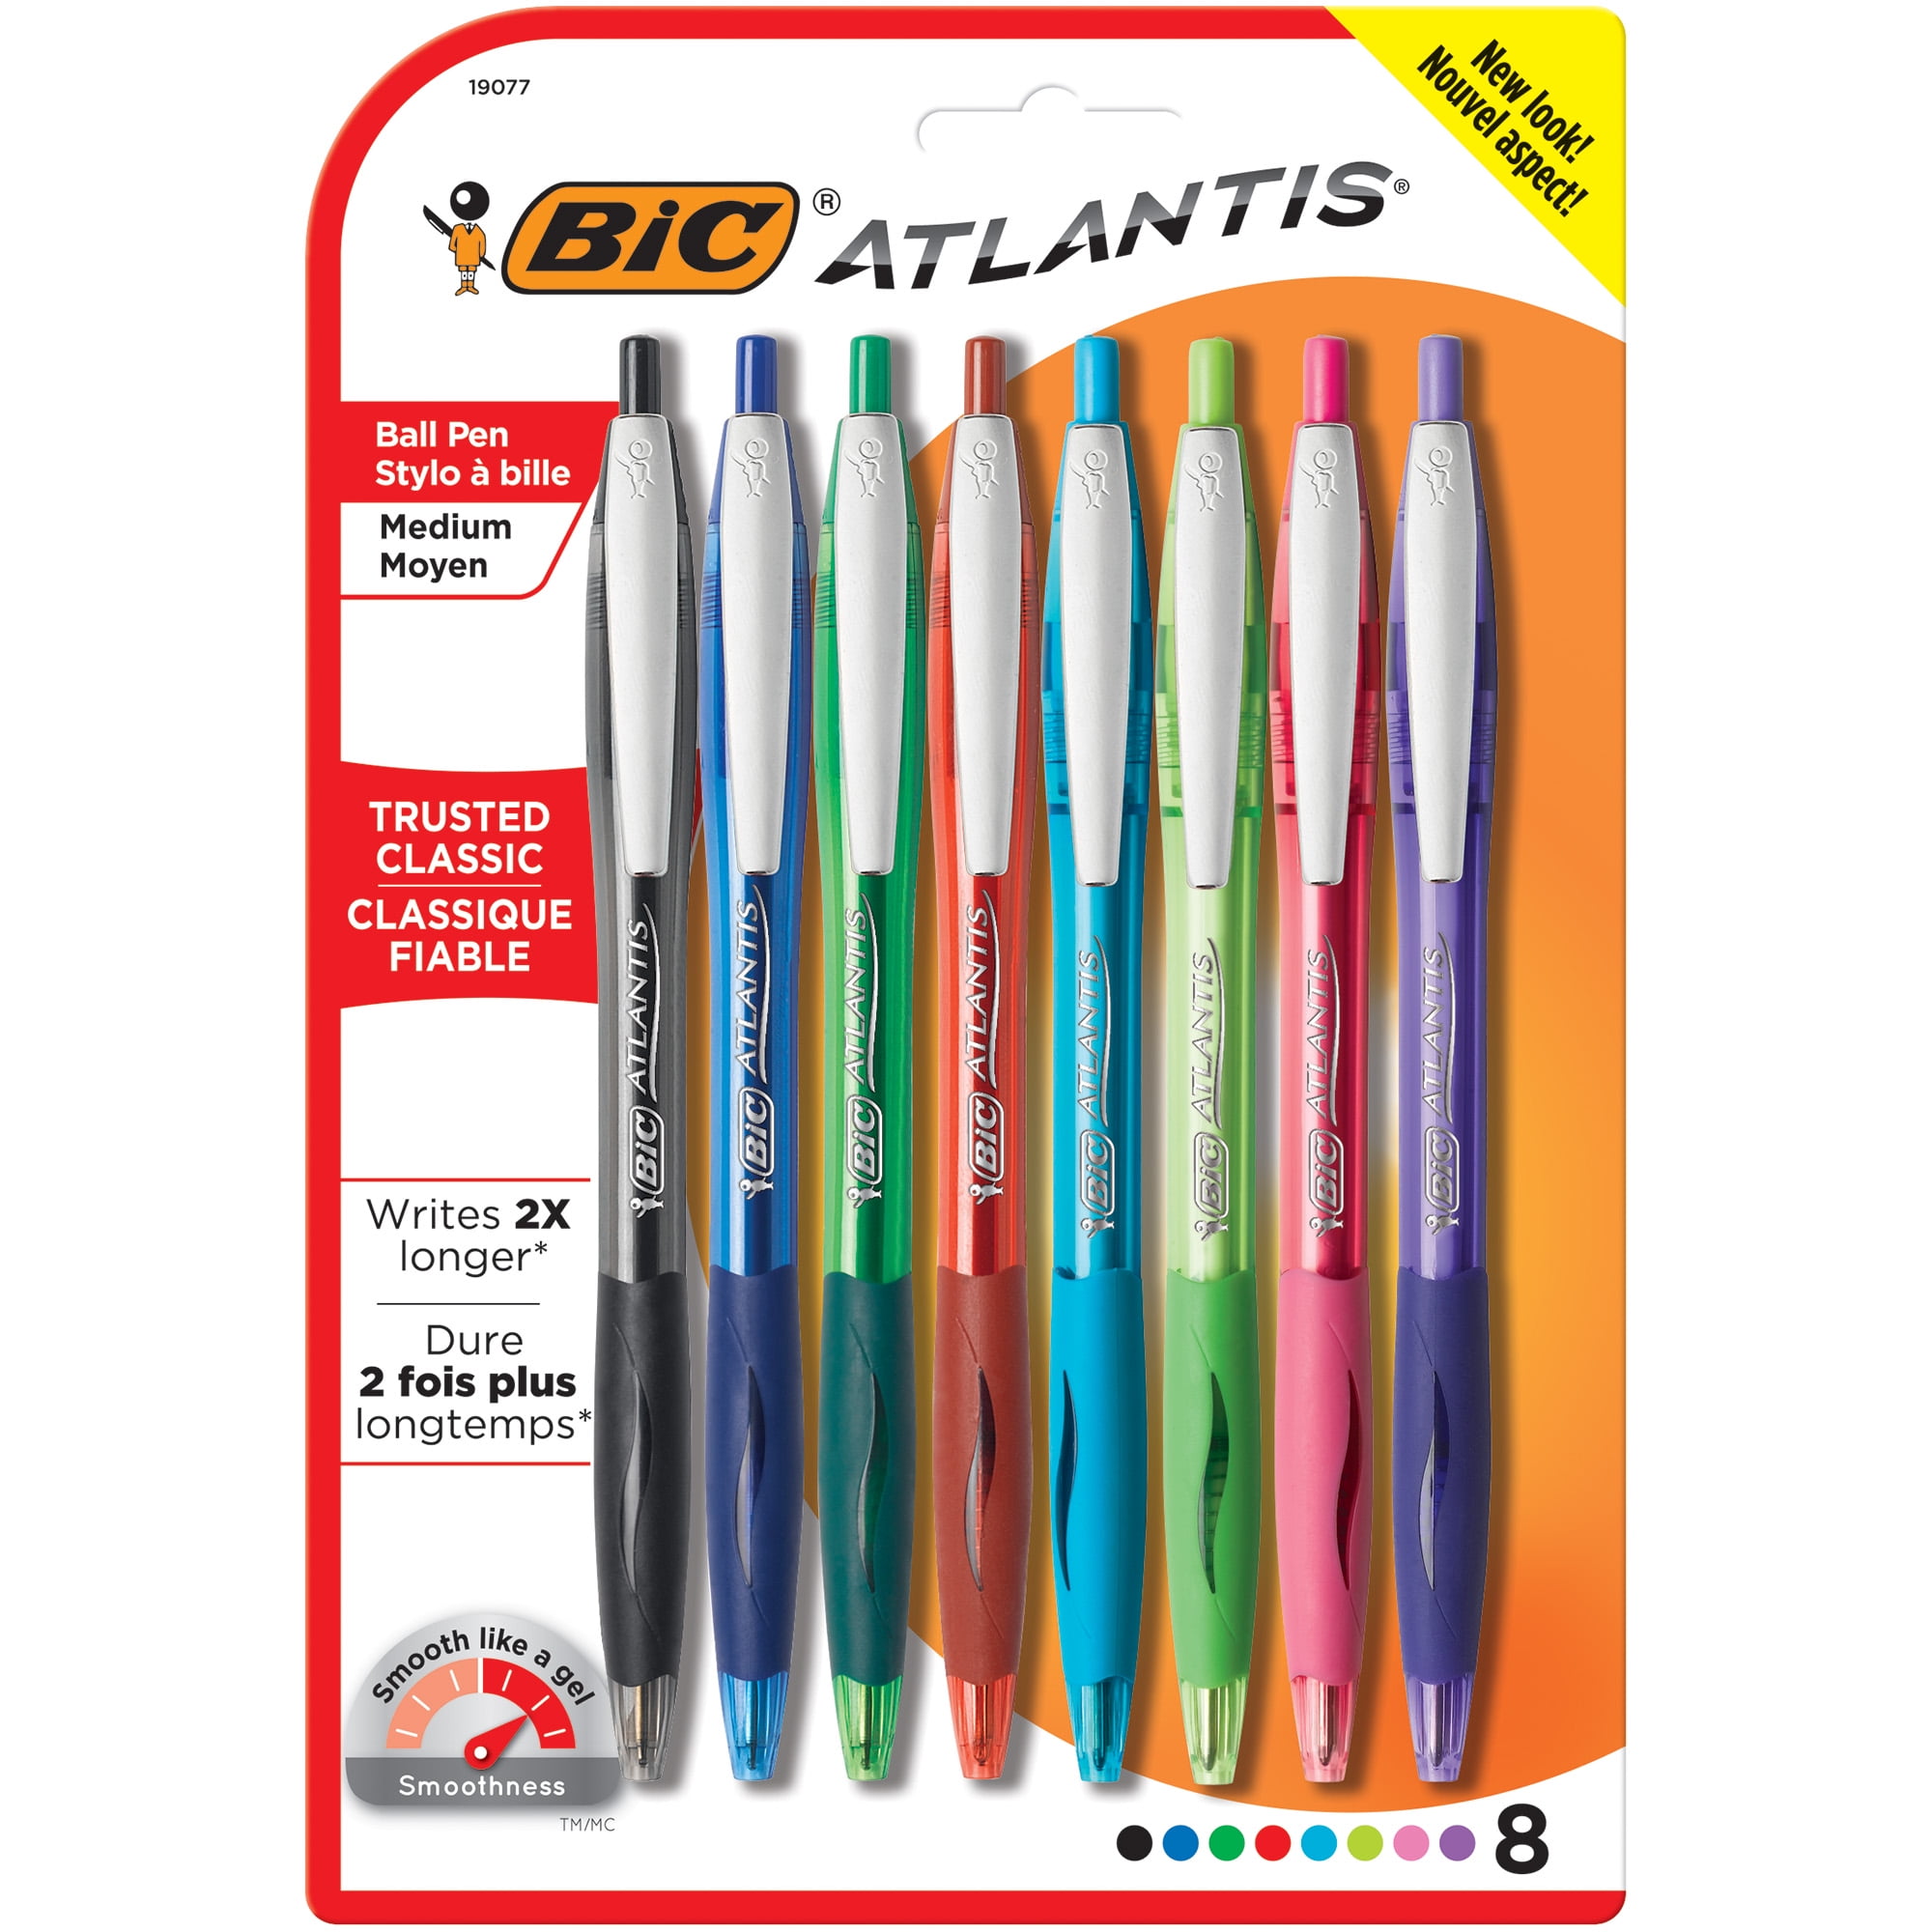 BIC Atlantis Ultra Comfort Retractable Ballpoint Pen 3 Colors 35170 